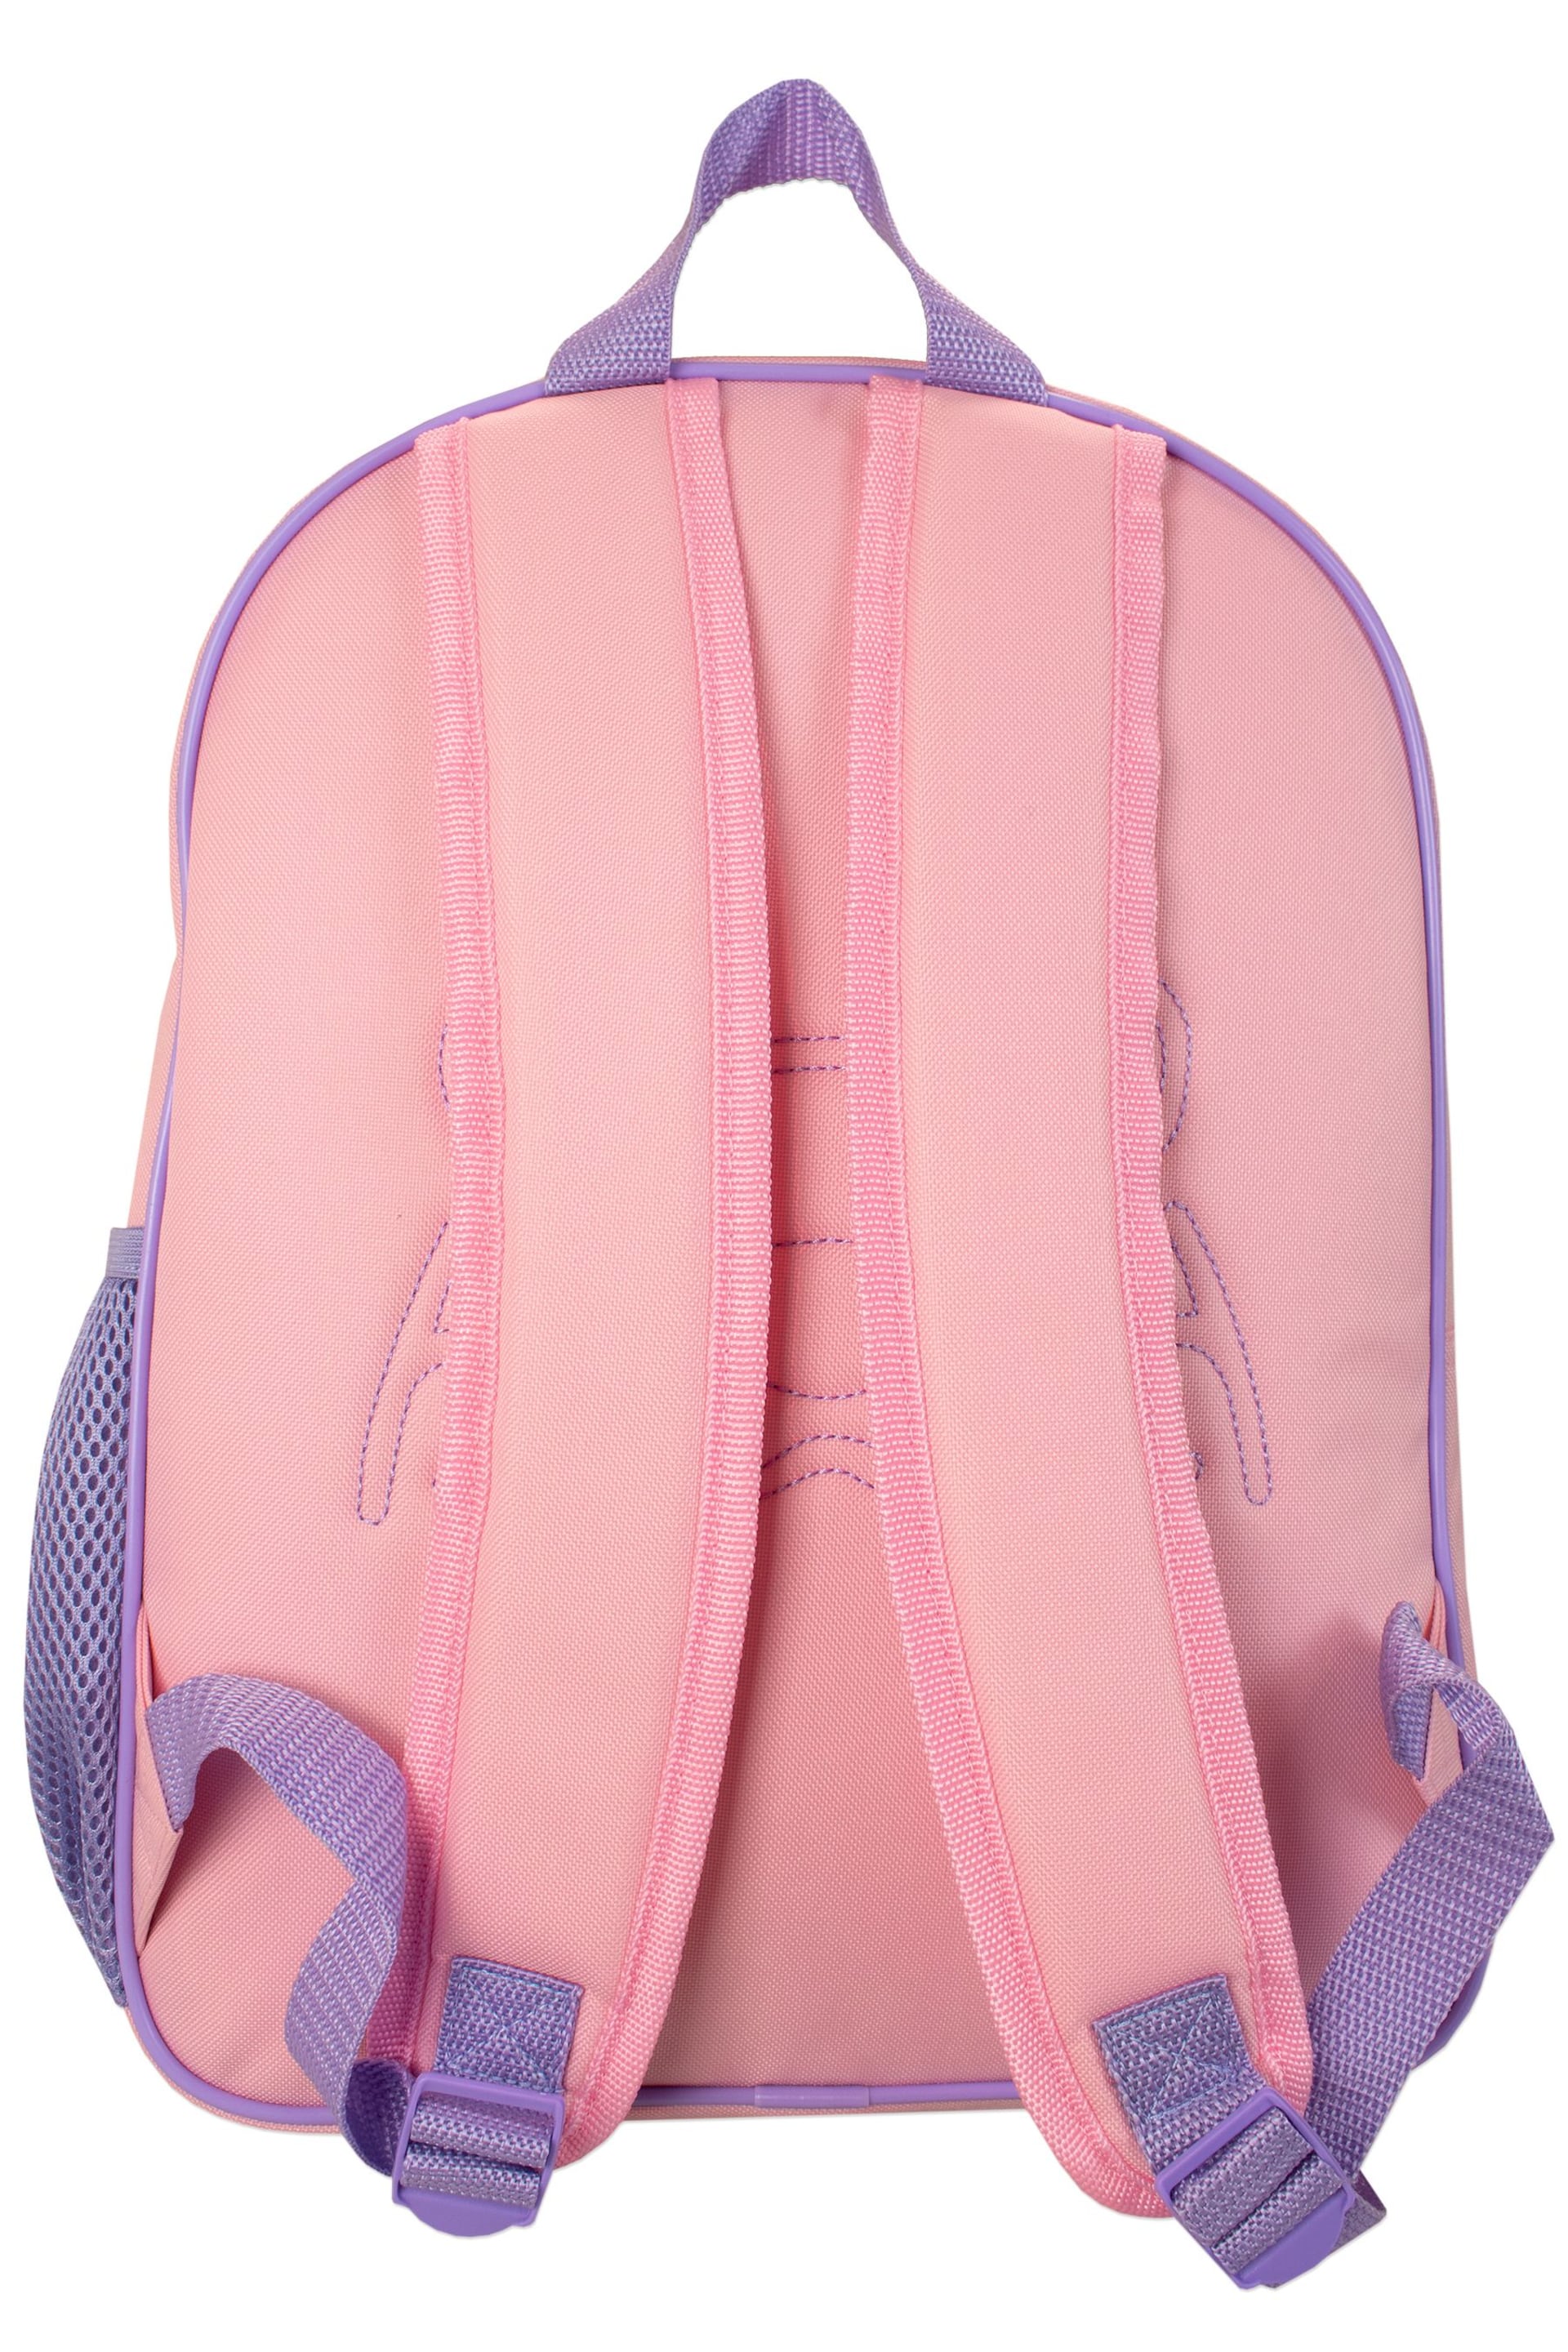 Harry Bear Pink Girls Dinosaur Backpack - Image 2 of 5